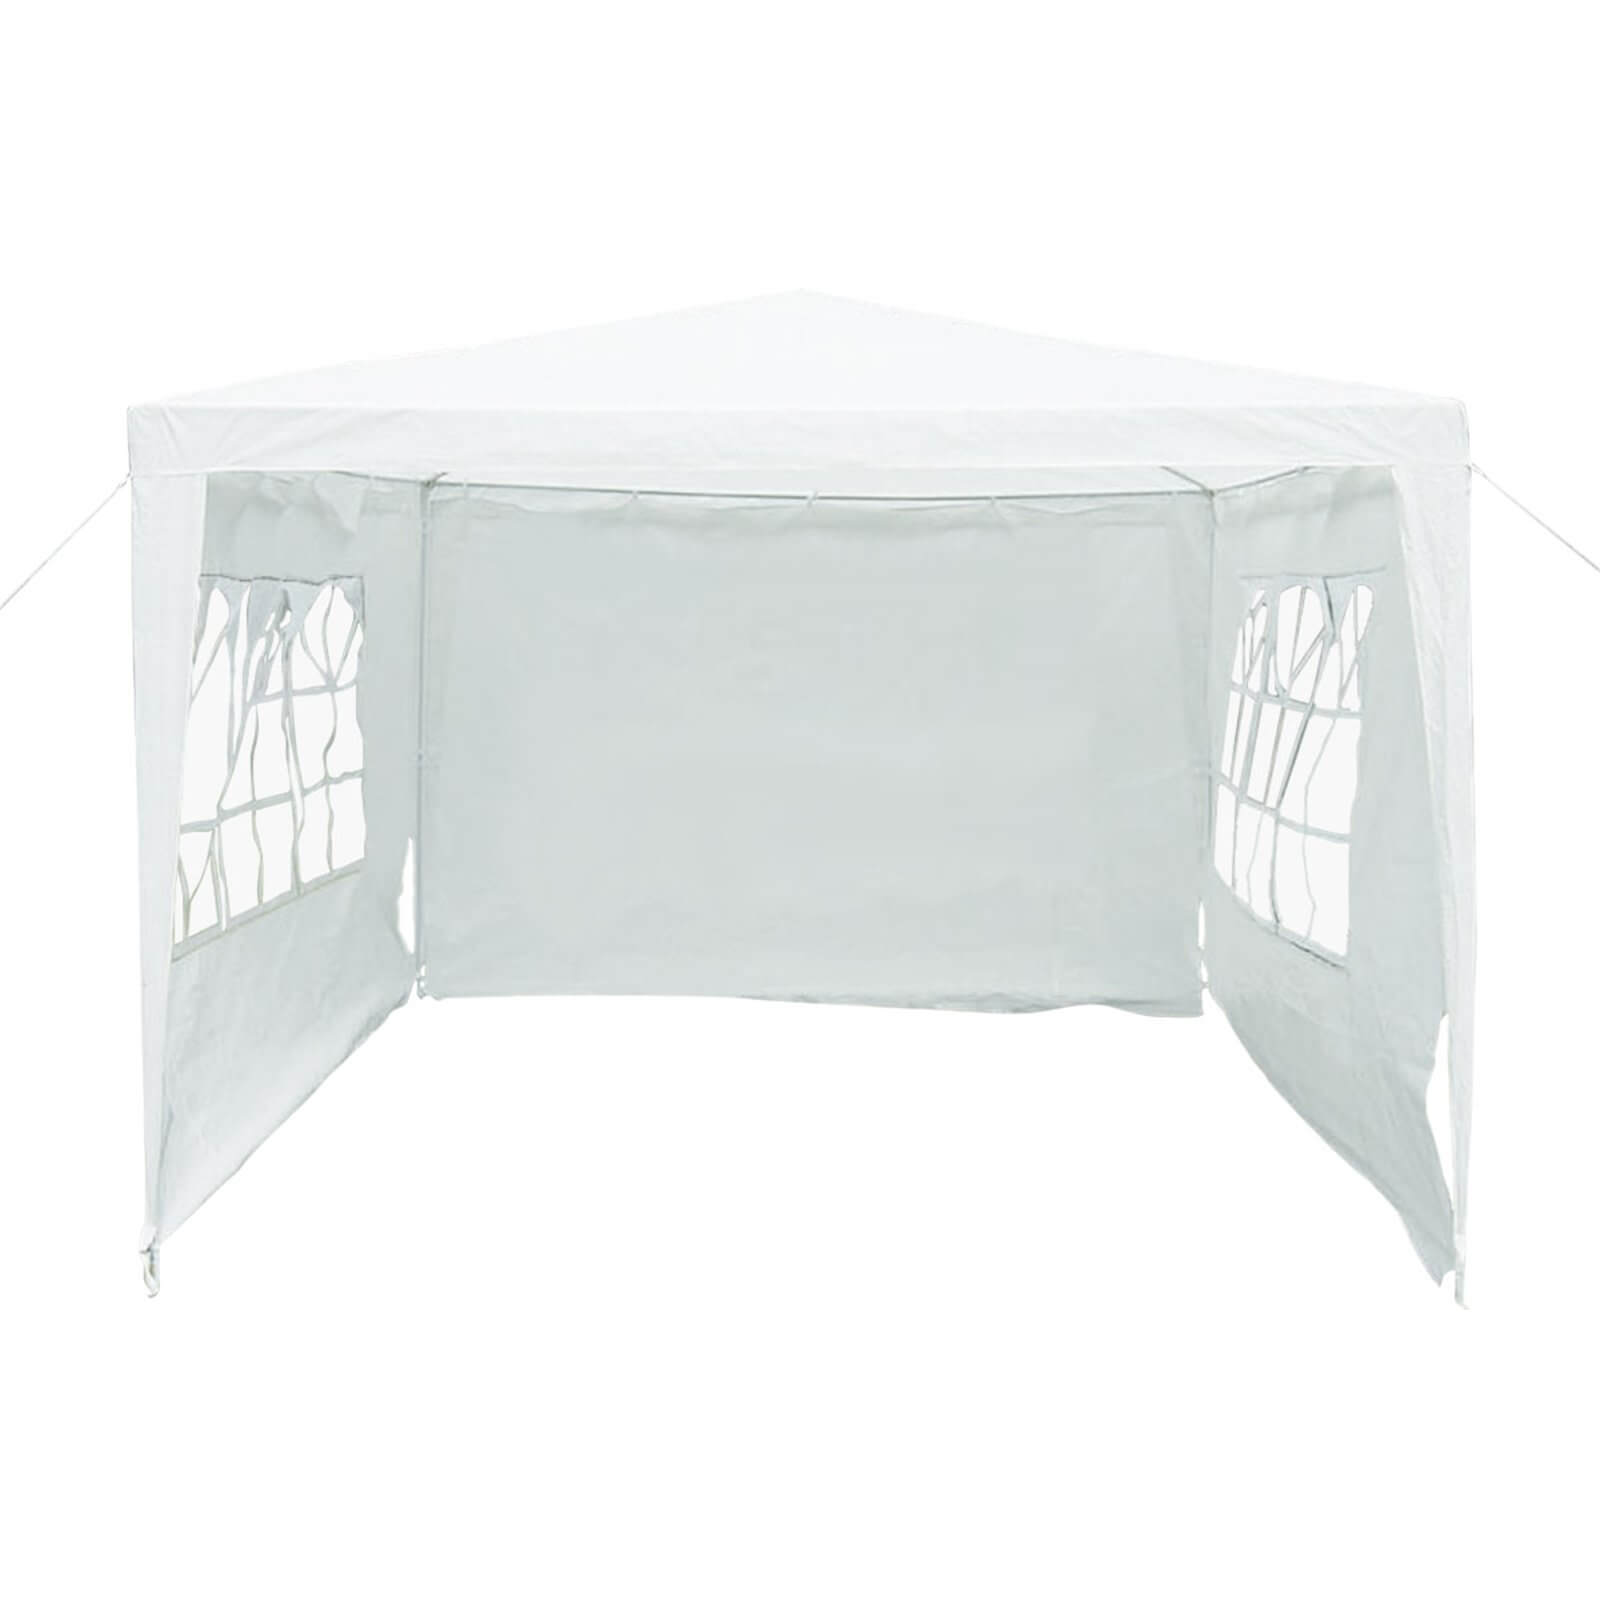 Charles Bentley Gazebo Awning Wedding/Party Tent - 3x3m - White